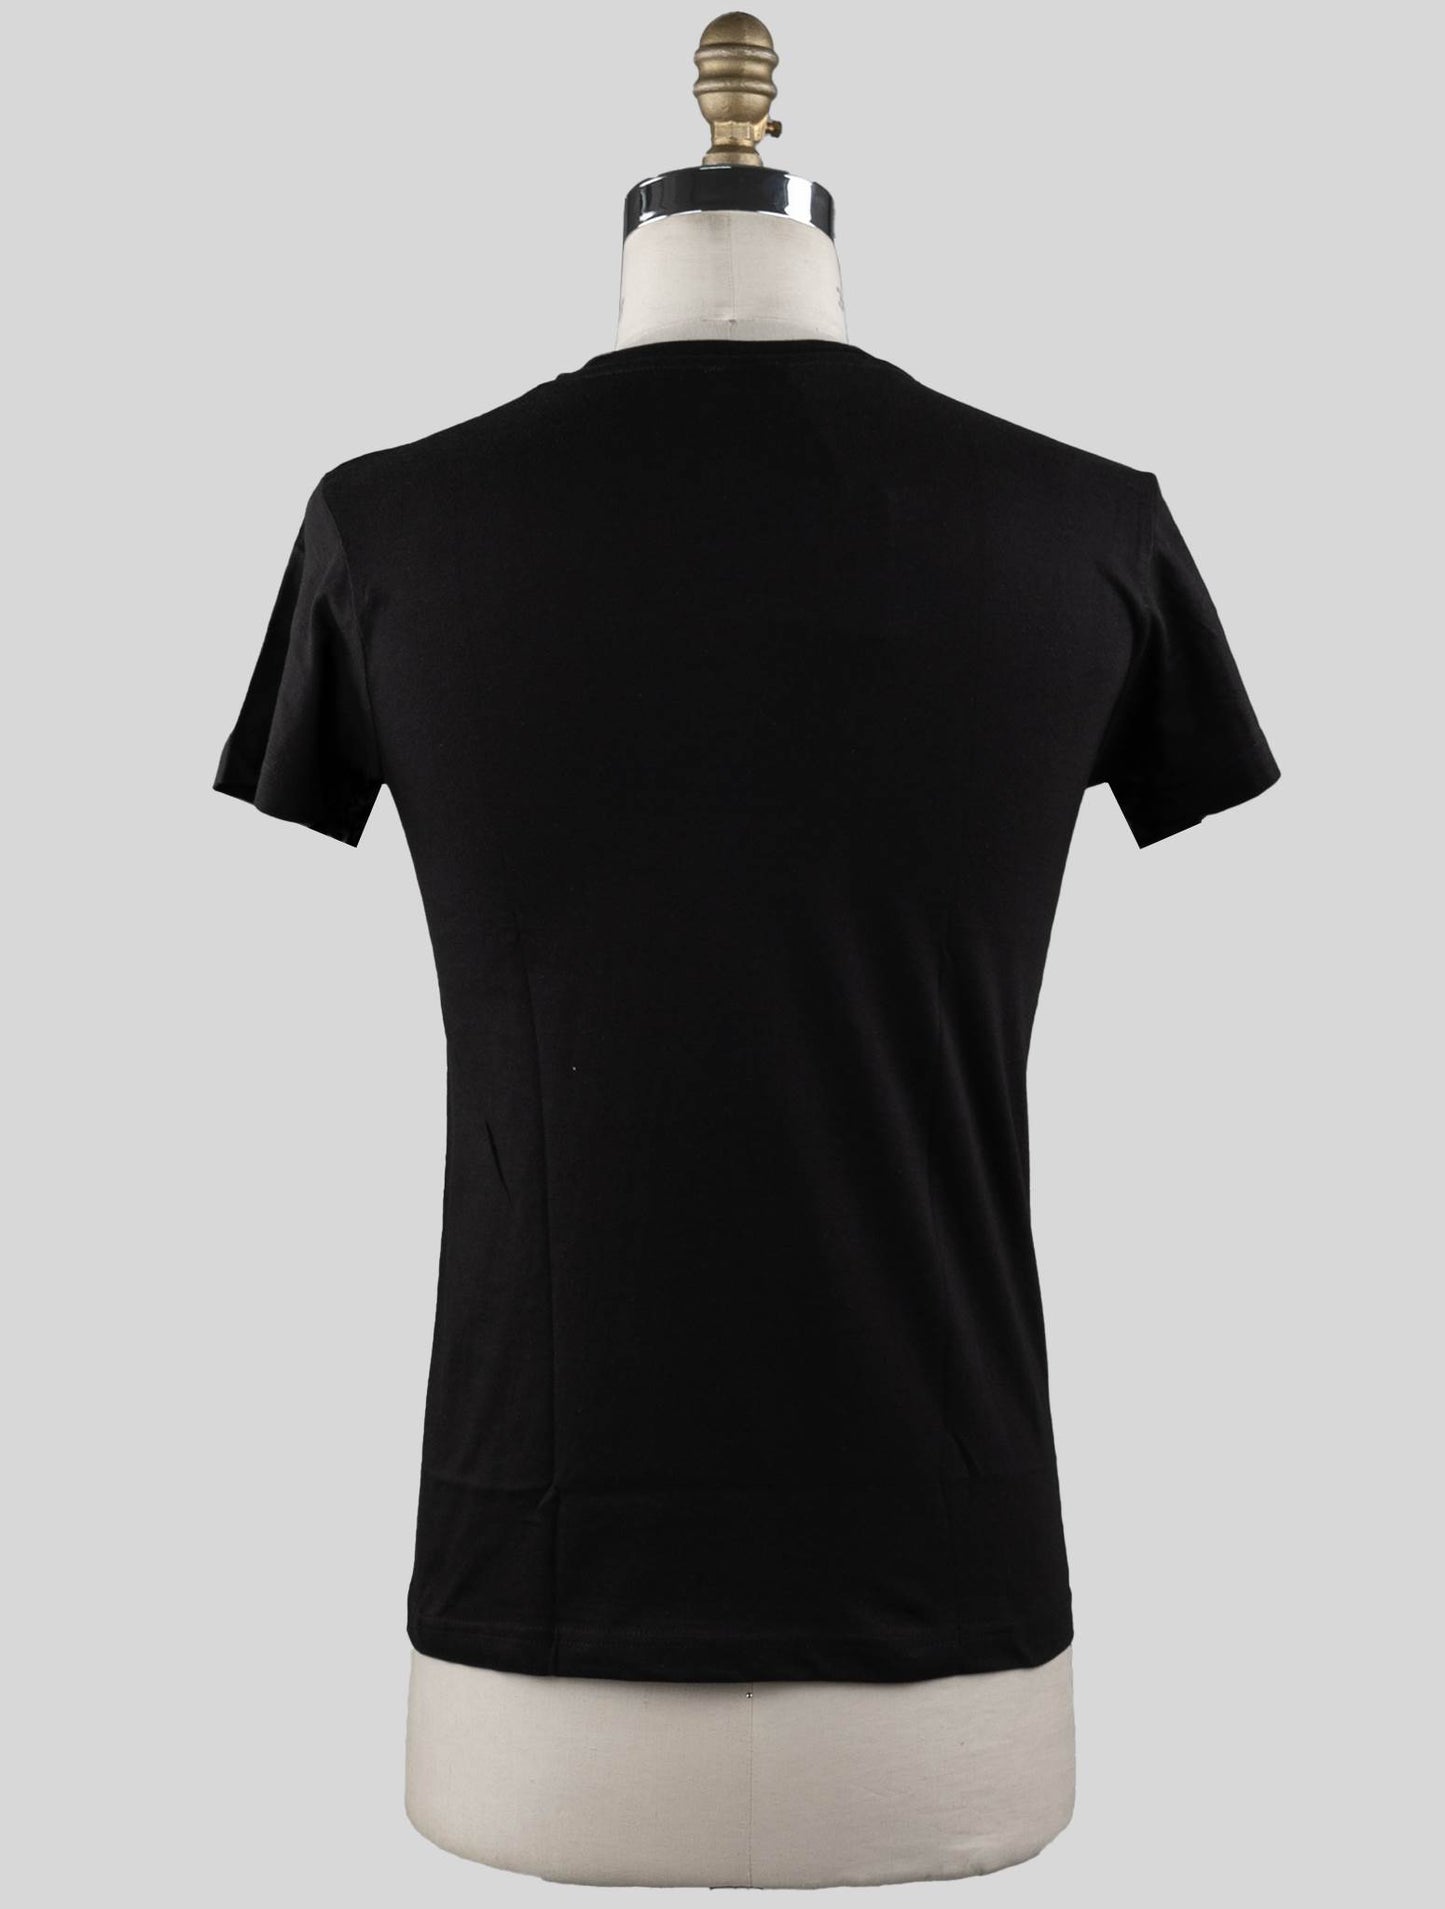 Sartorio Napoli T-shirt en coton noir édition spéciale